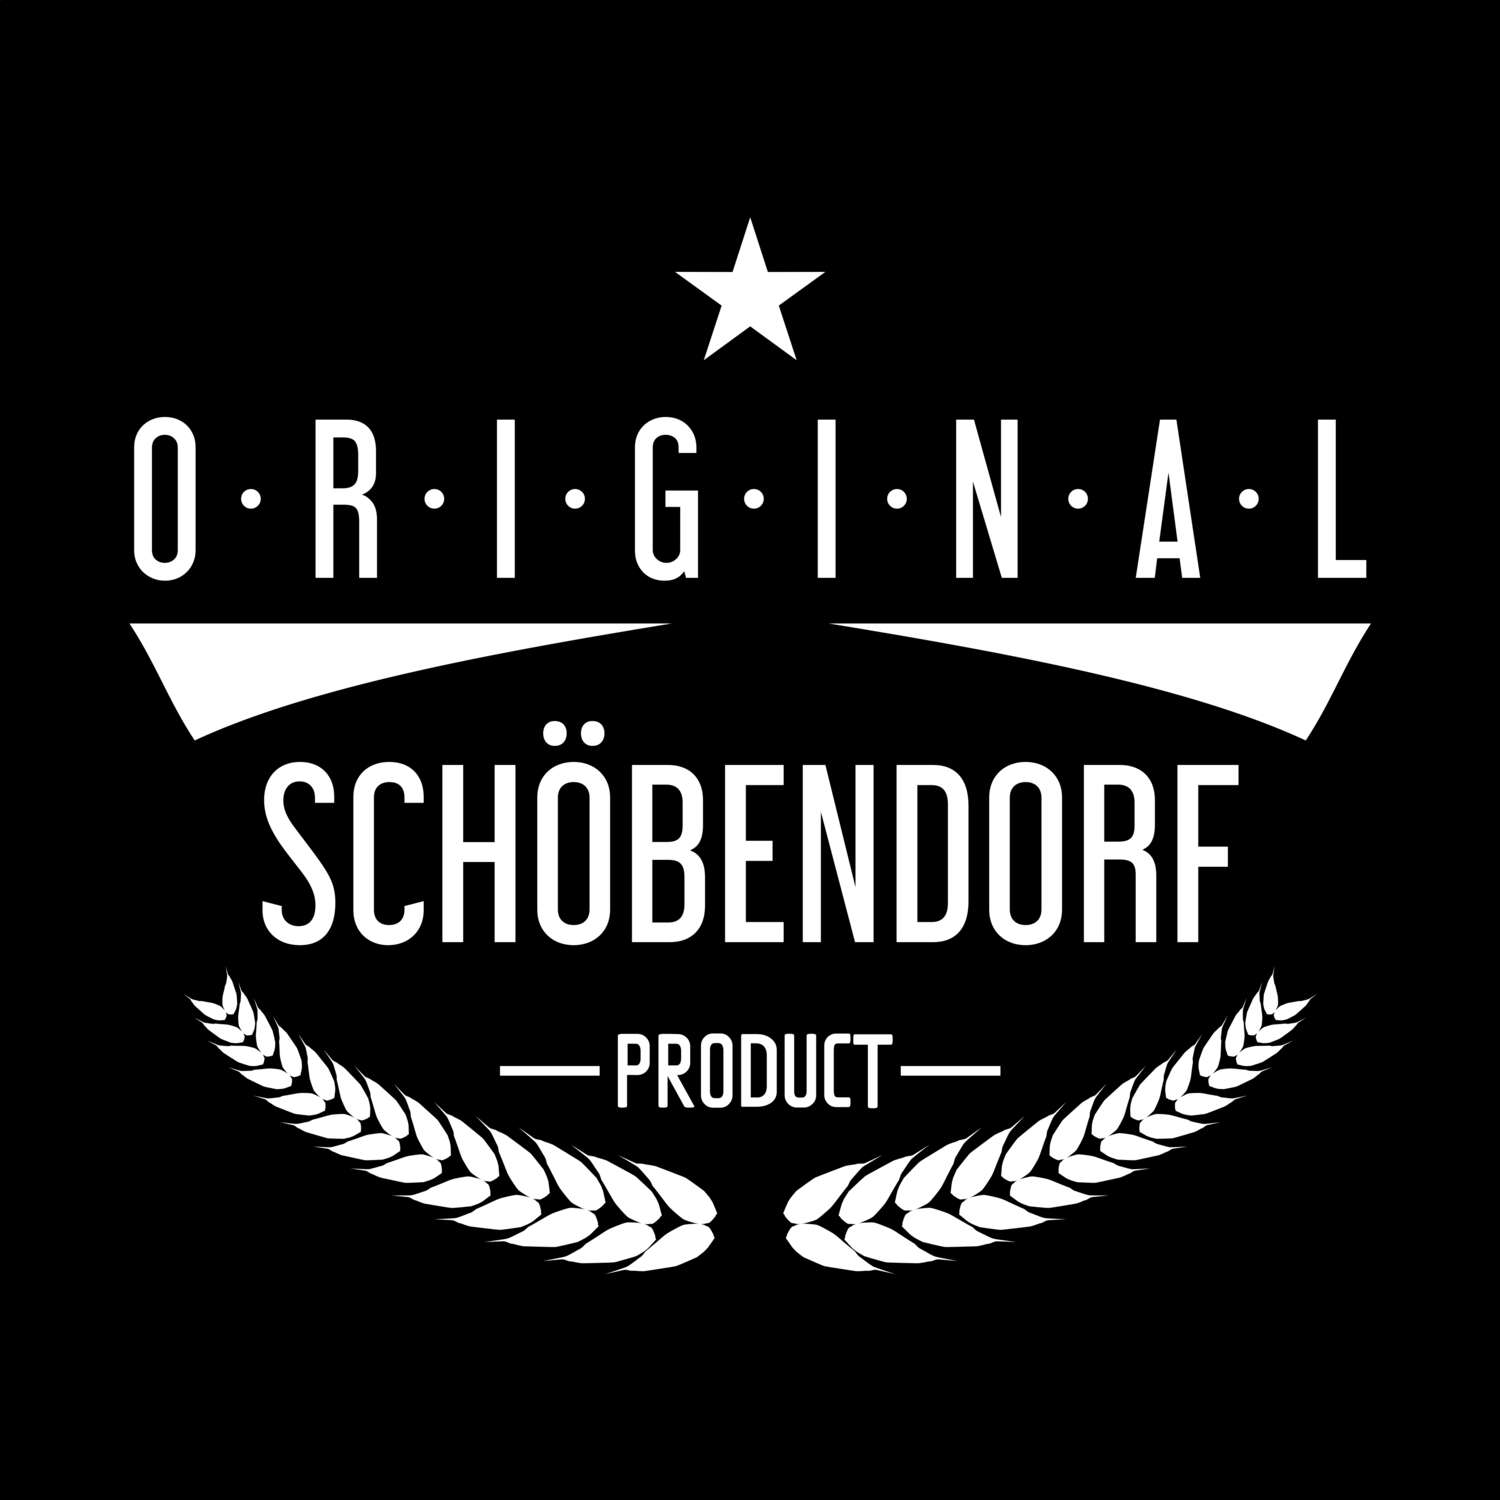 Schöbendorf T-Shirt »Original Product«